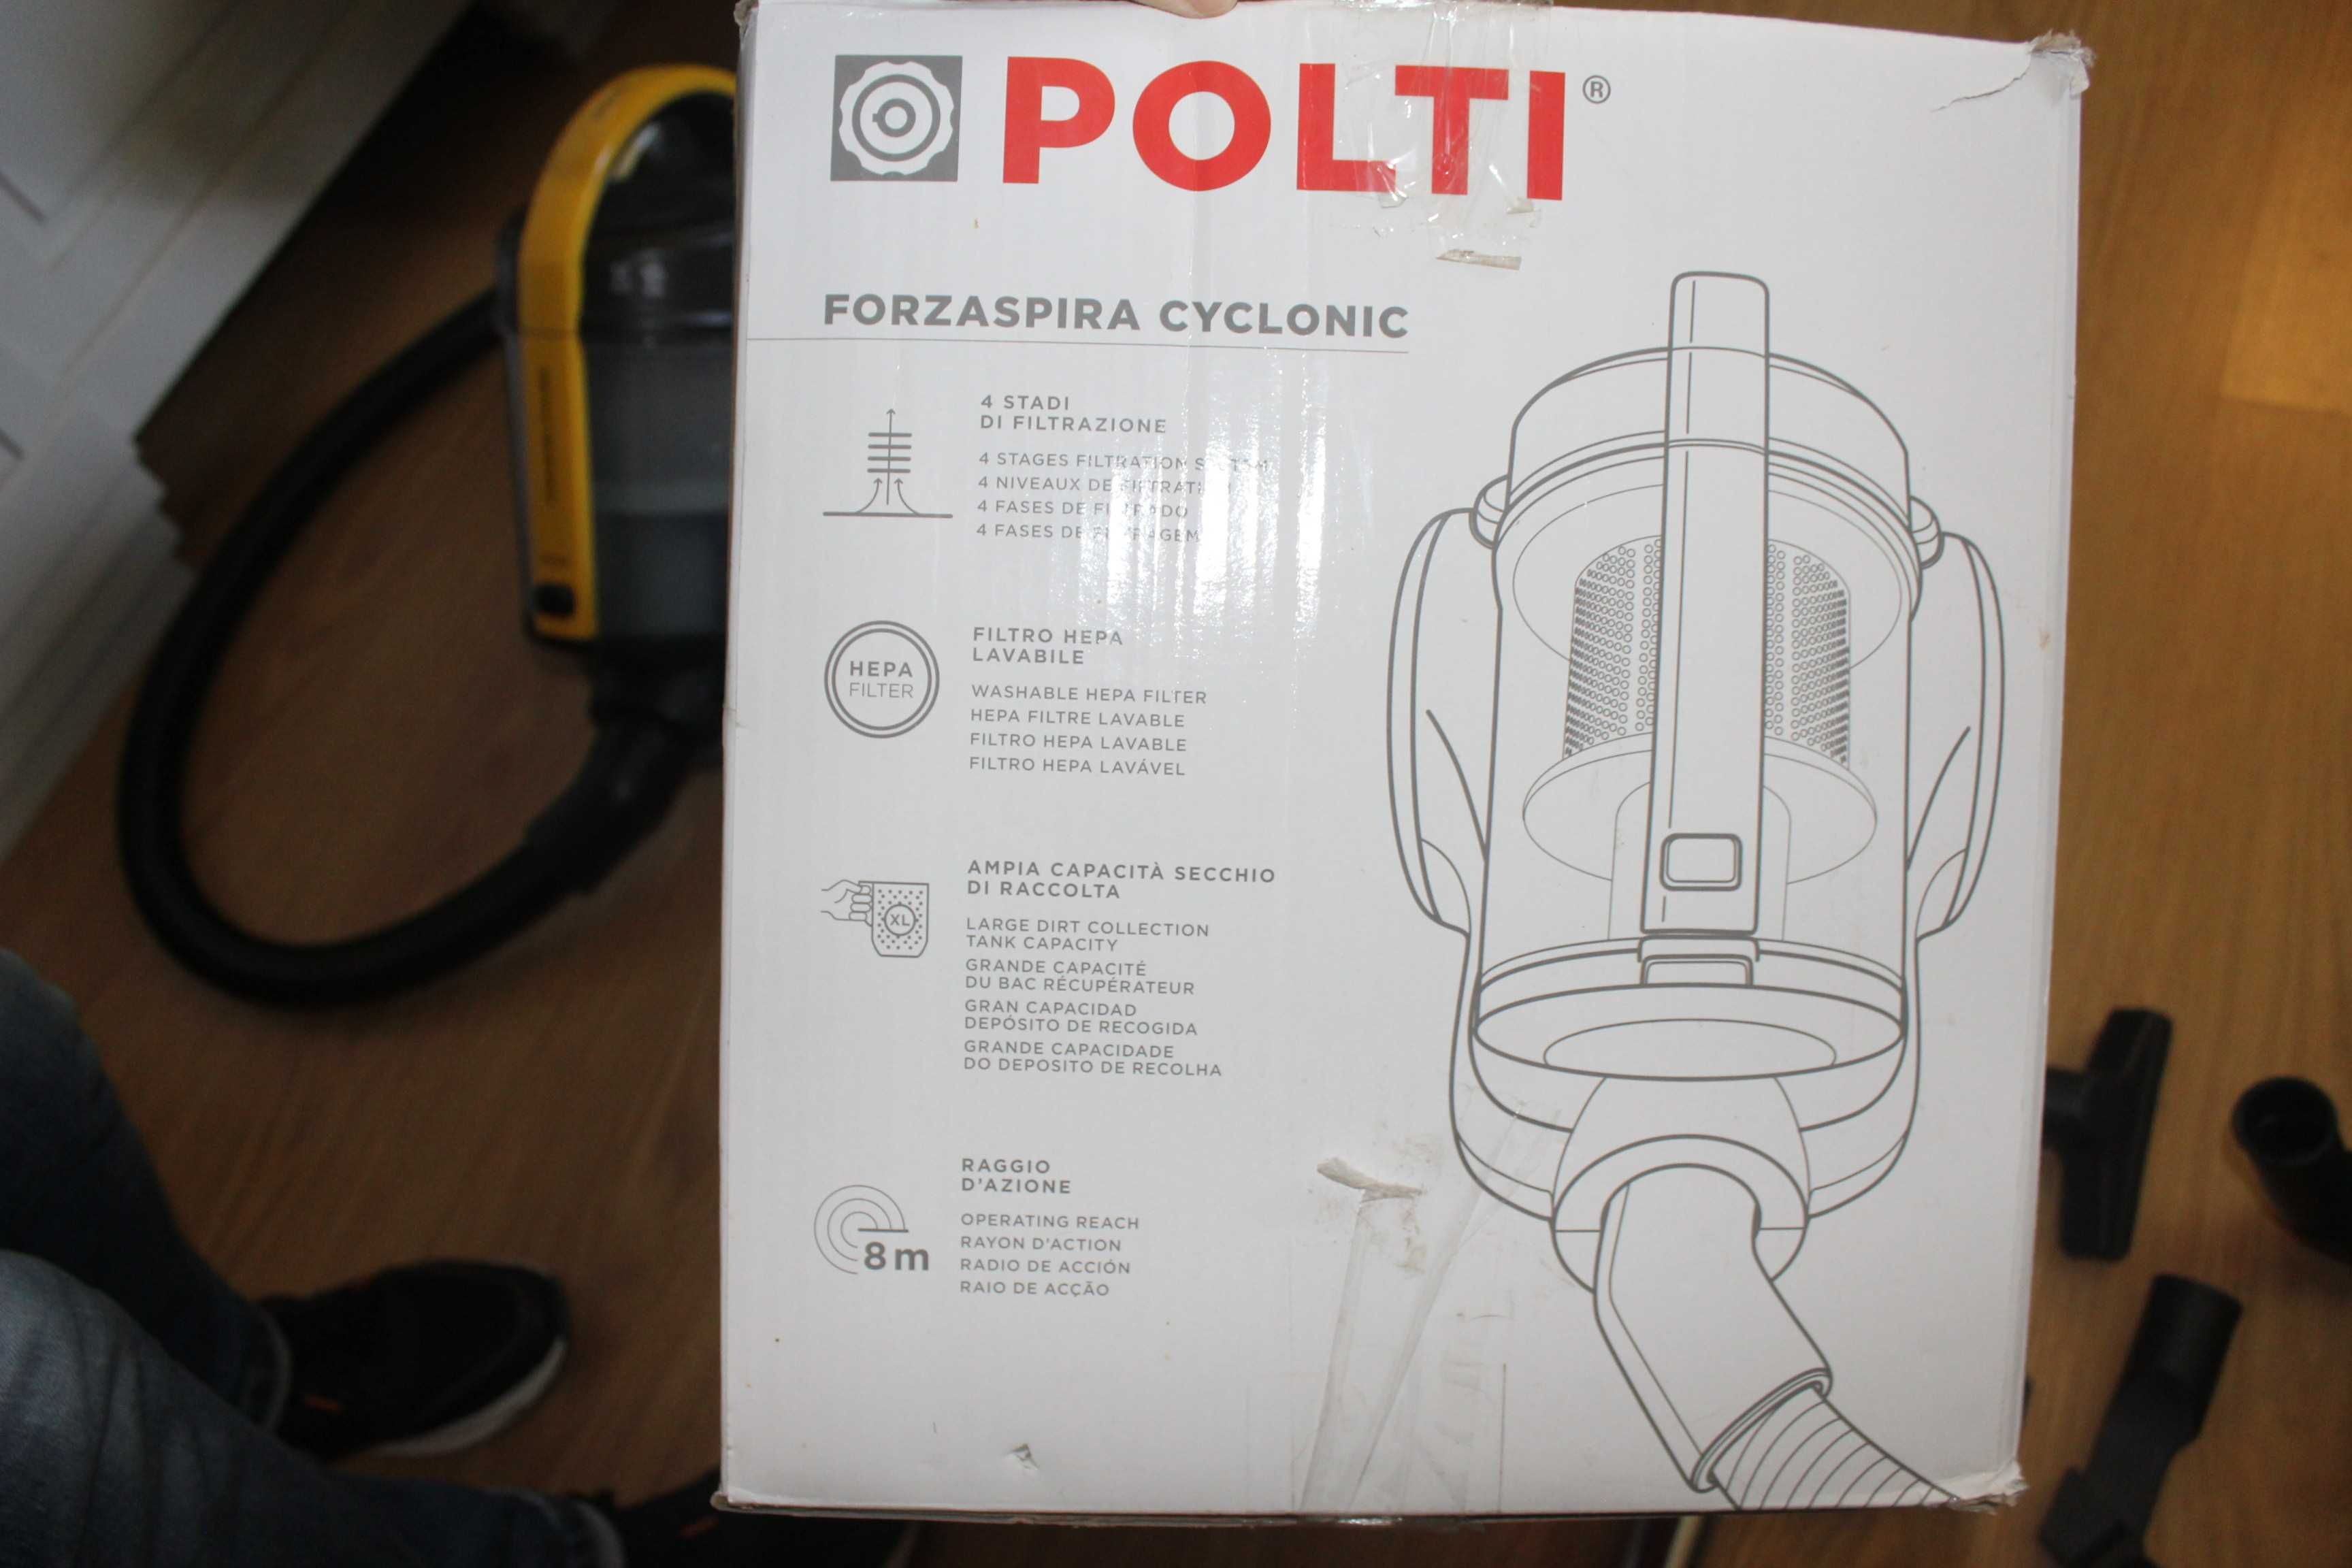 Aspirador POLTI - Forzaspira Cyclonic 800 Watt